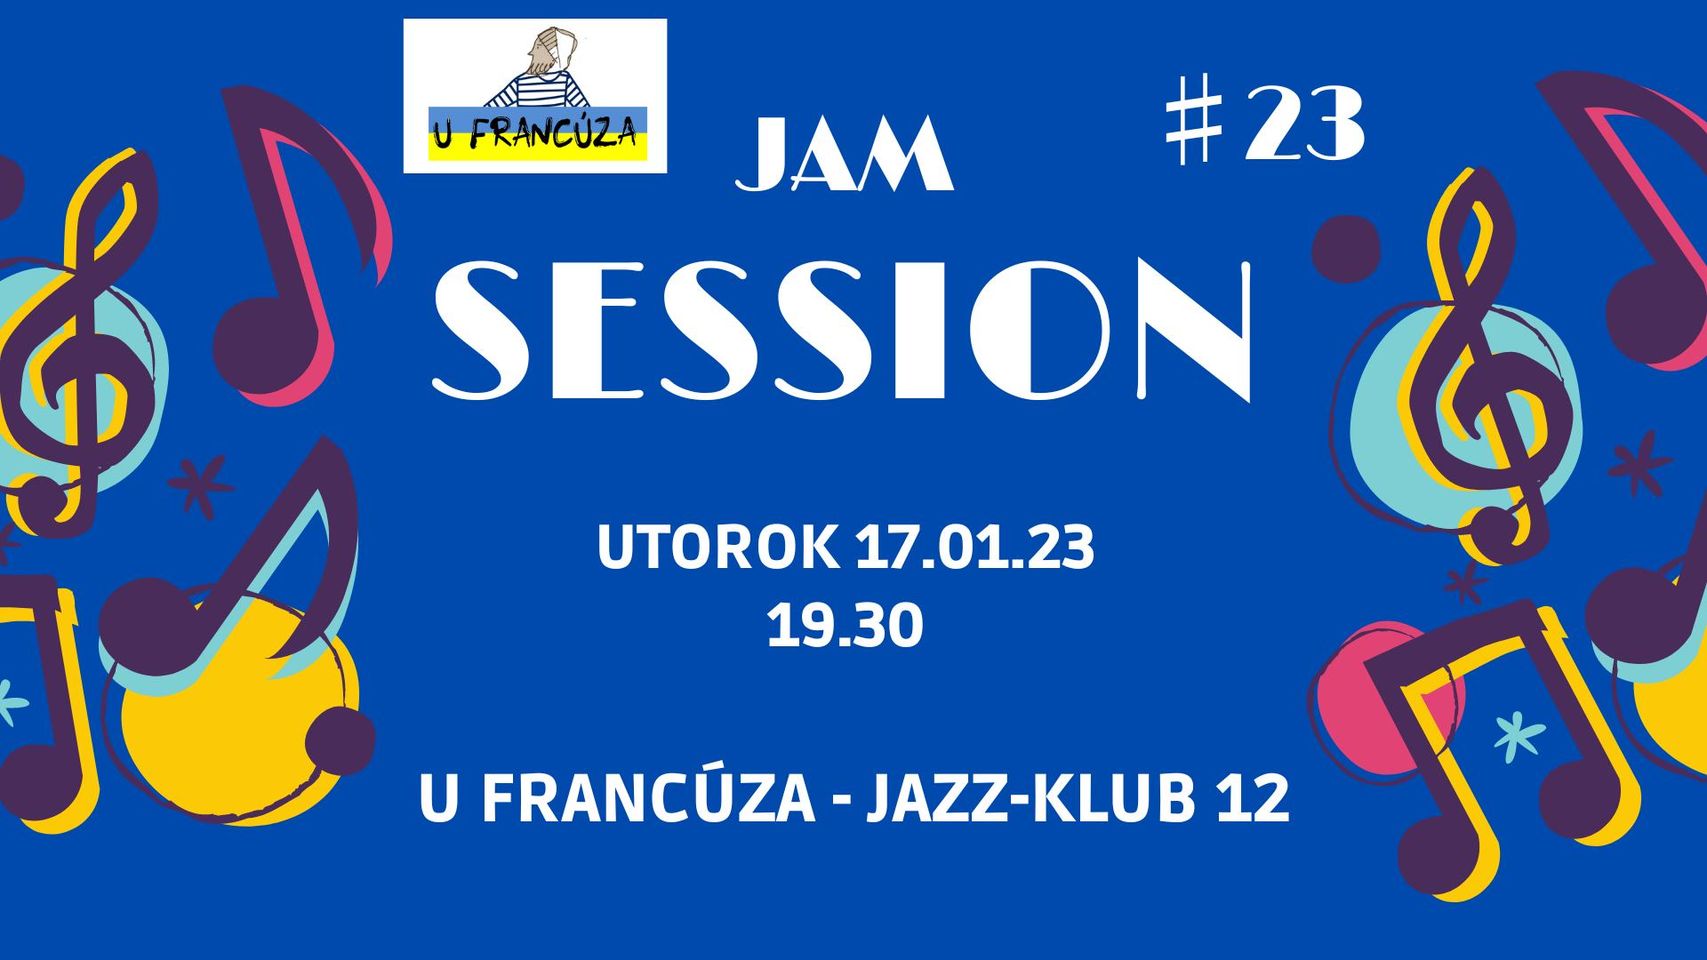 Jam Session #23 - U Francúza